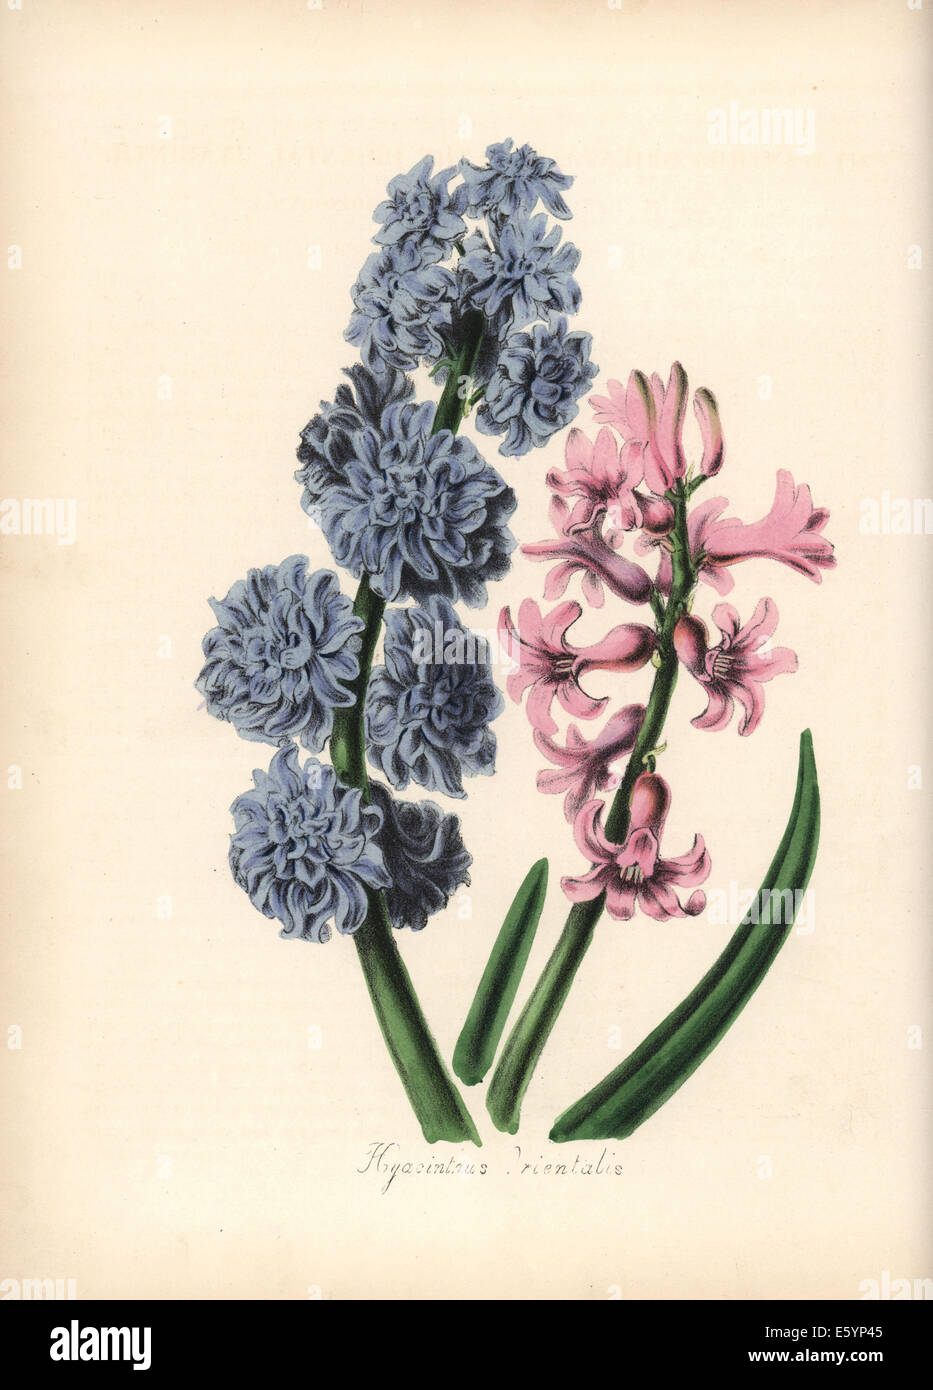 Hyacinth, Hyacinthus orientalis. Stock Photo